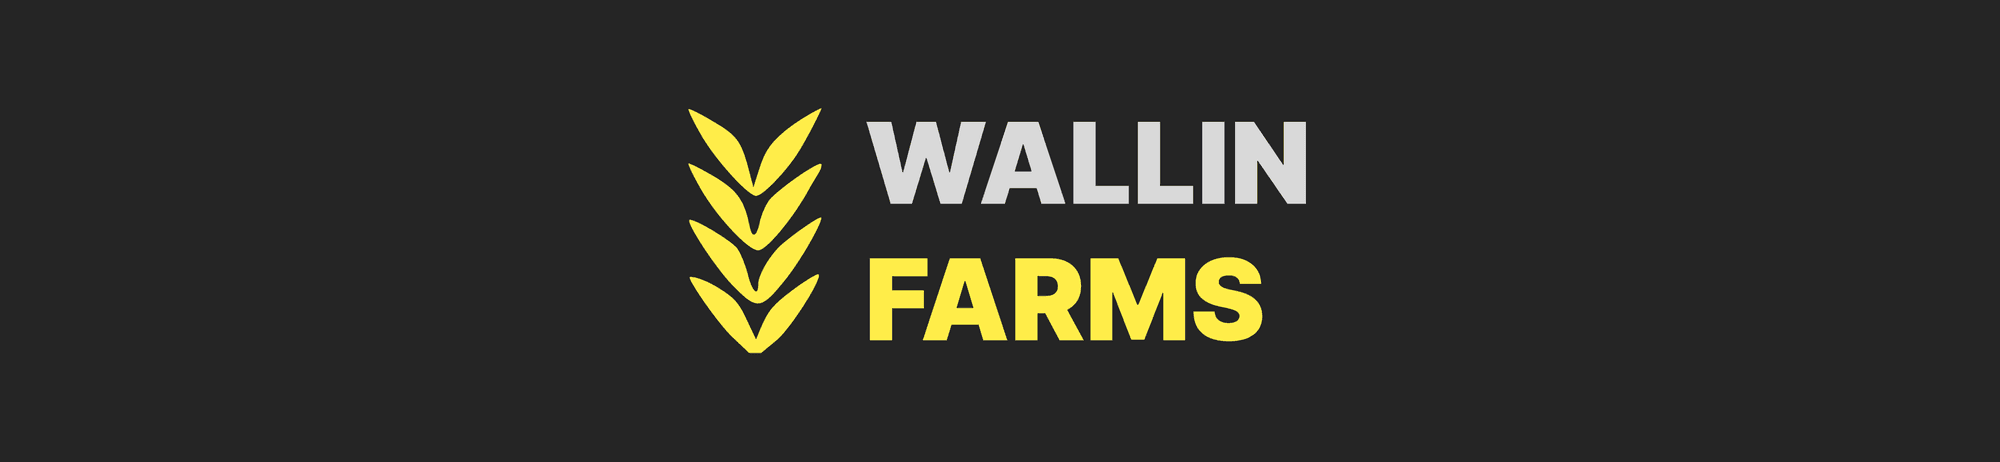 Software Engineer - Wallin Farms